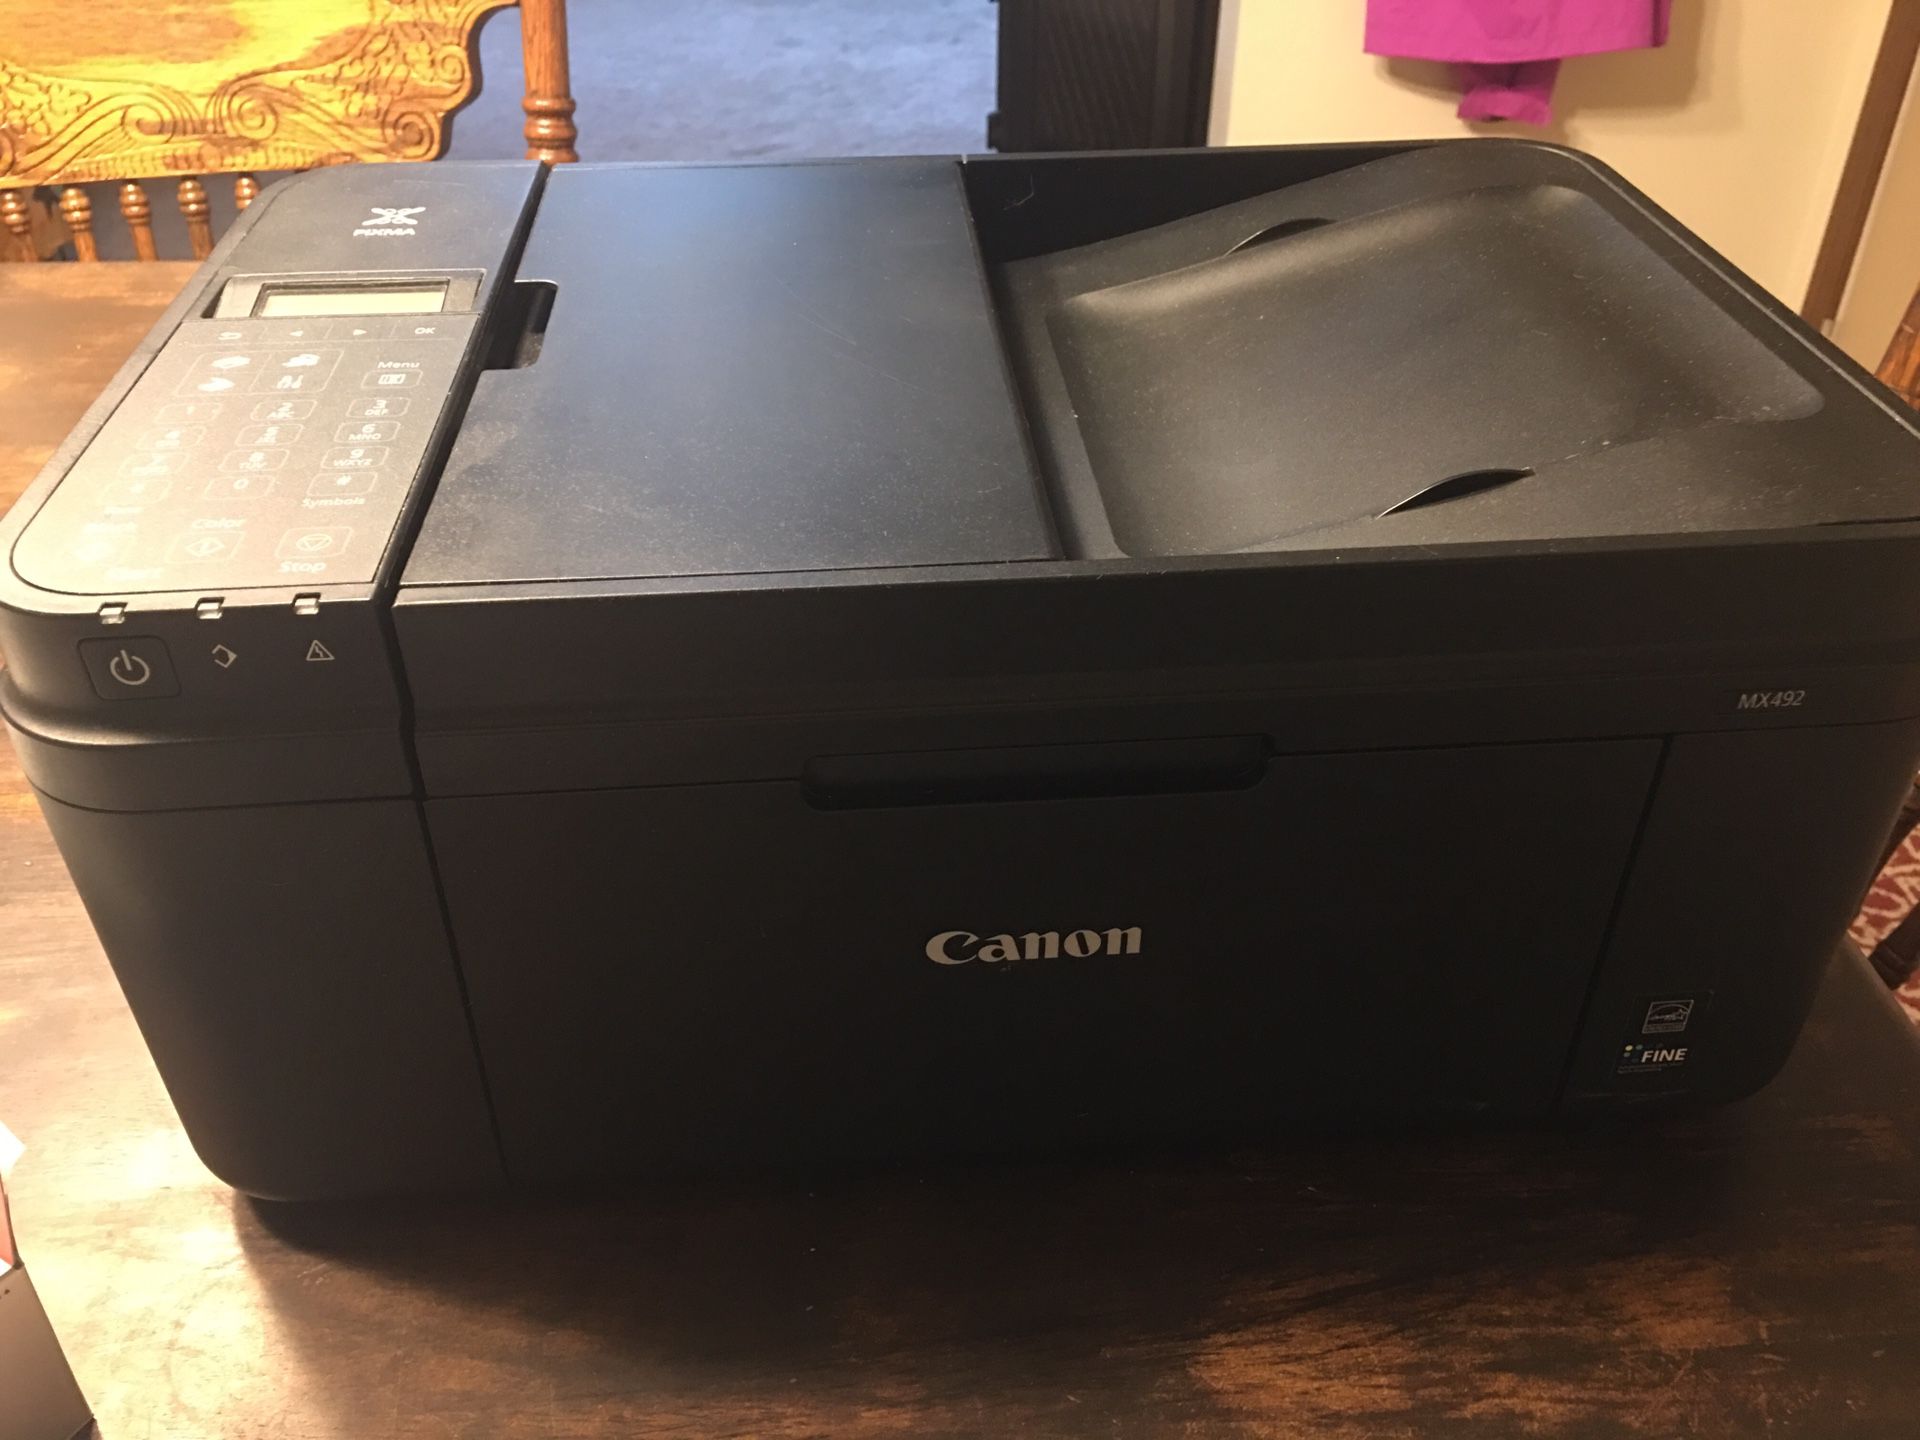 Cannon printer/ scanner